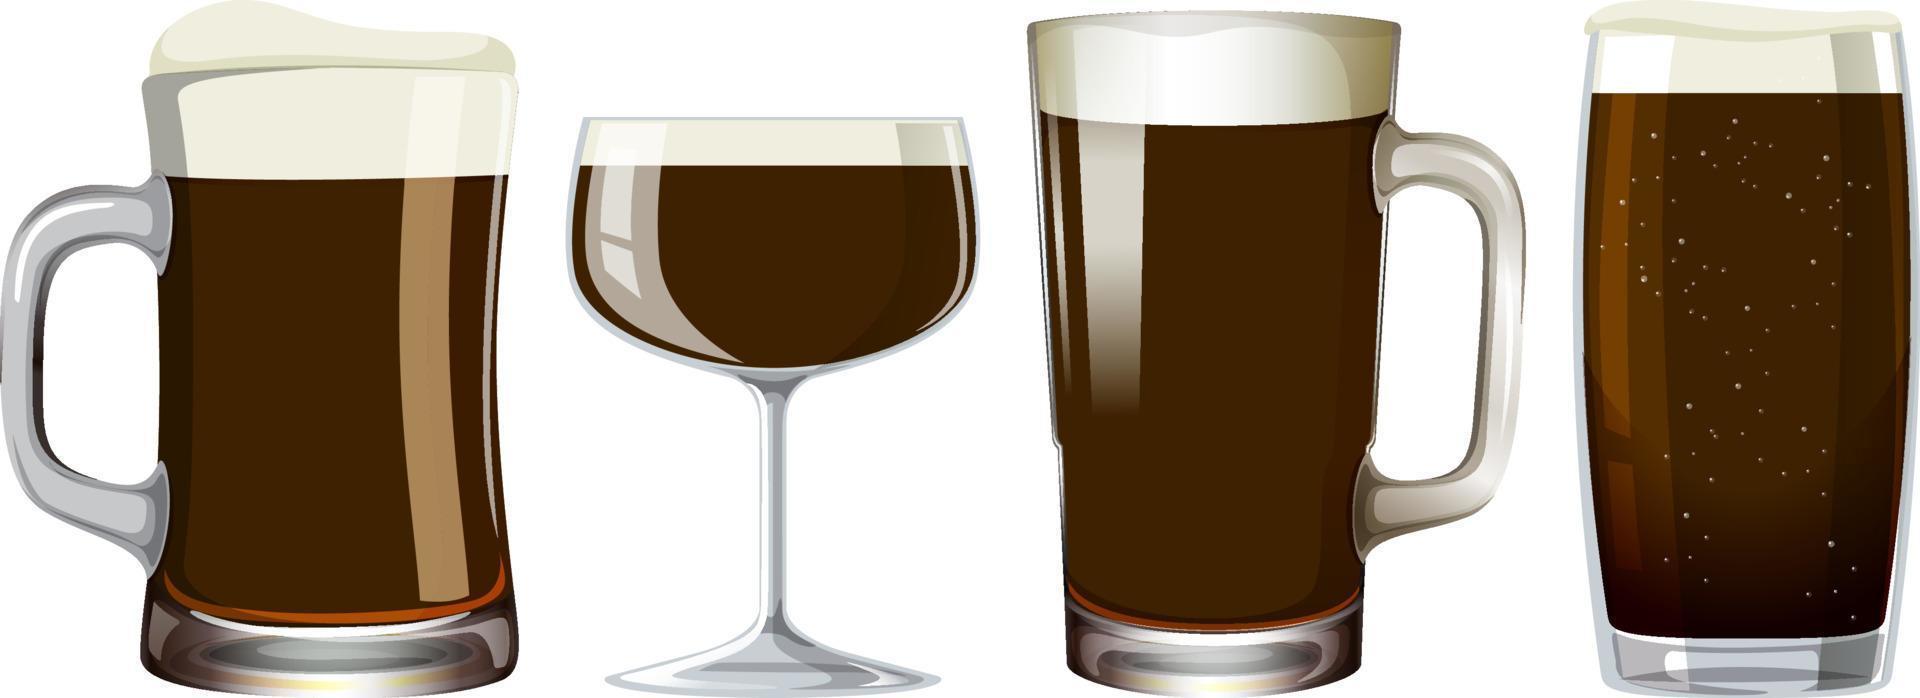 alkoholdryck i olika glas set vektor